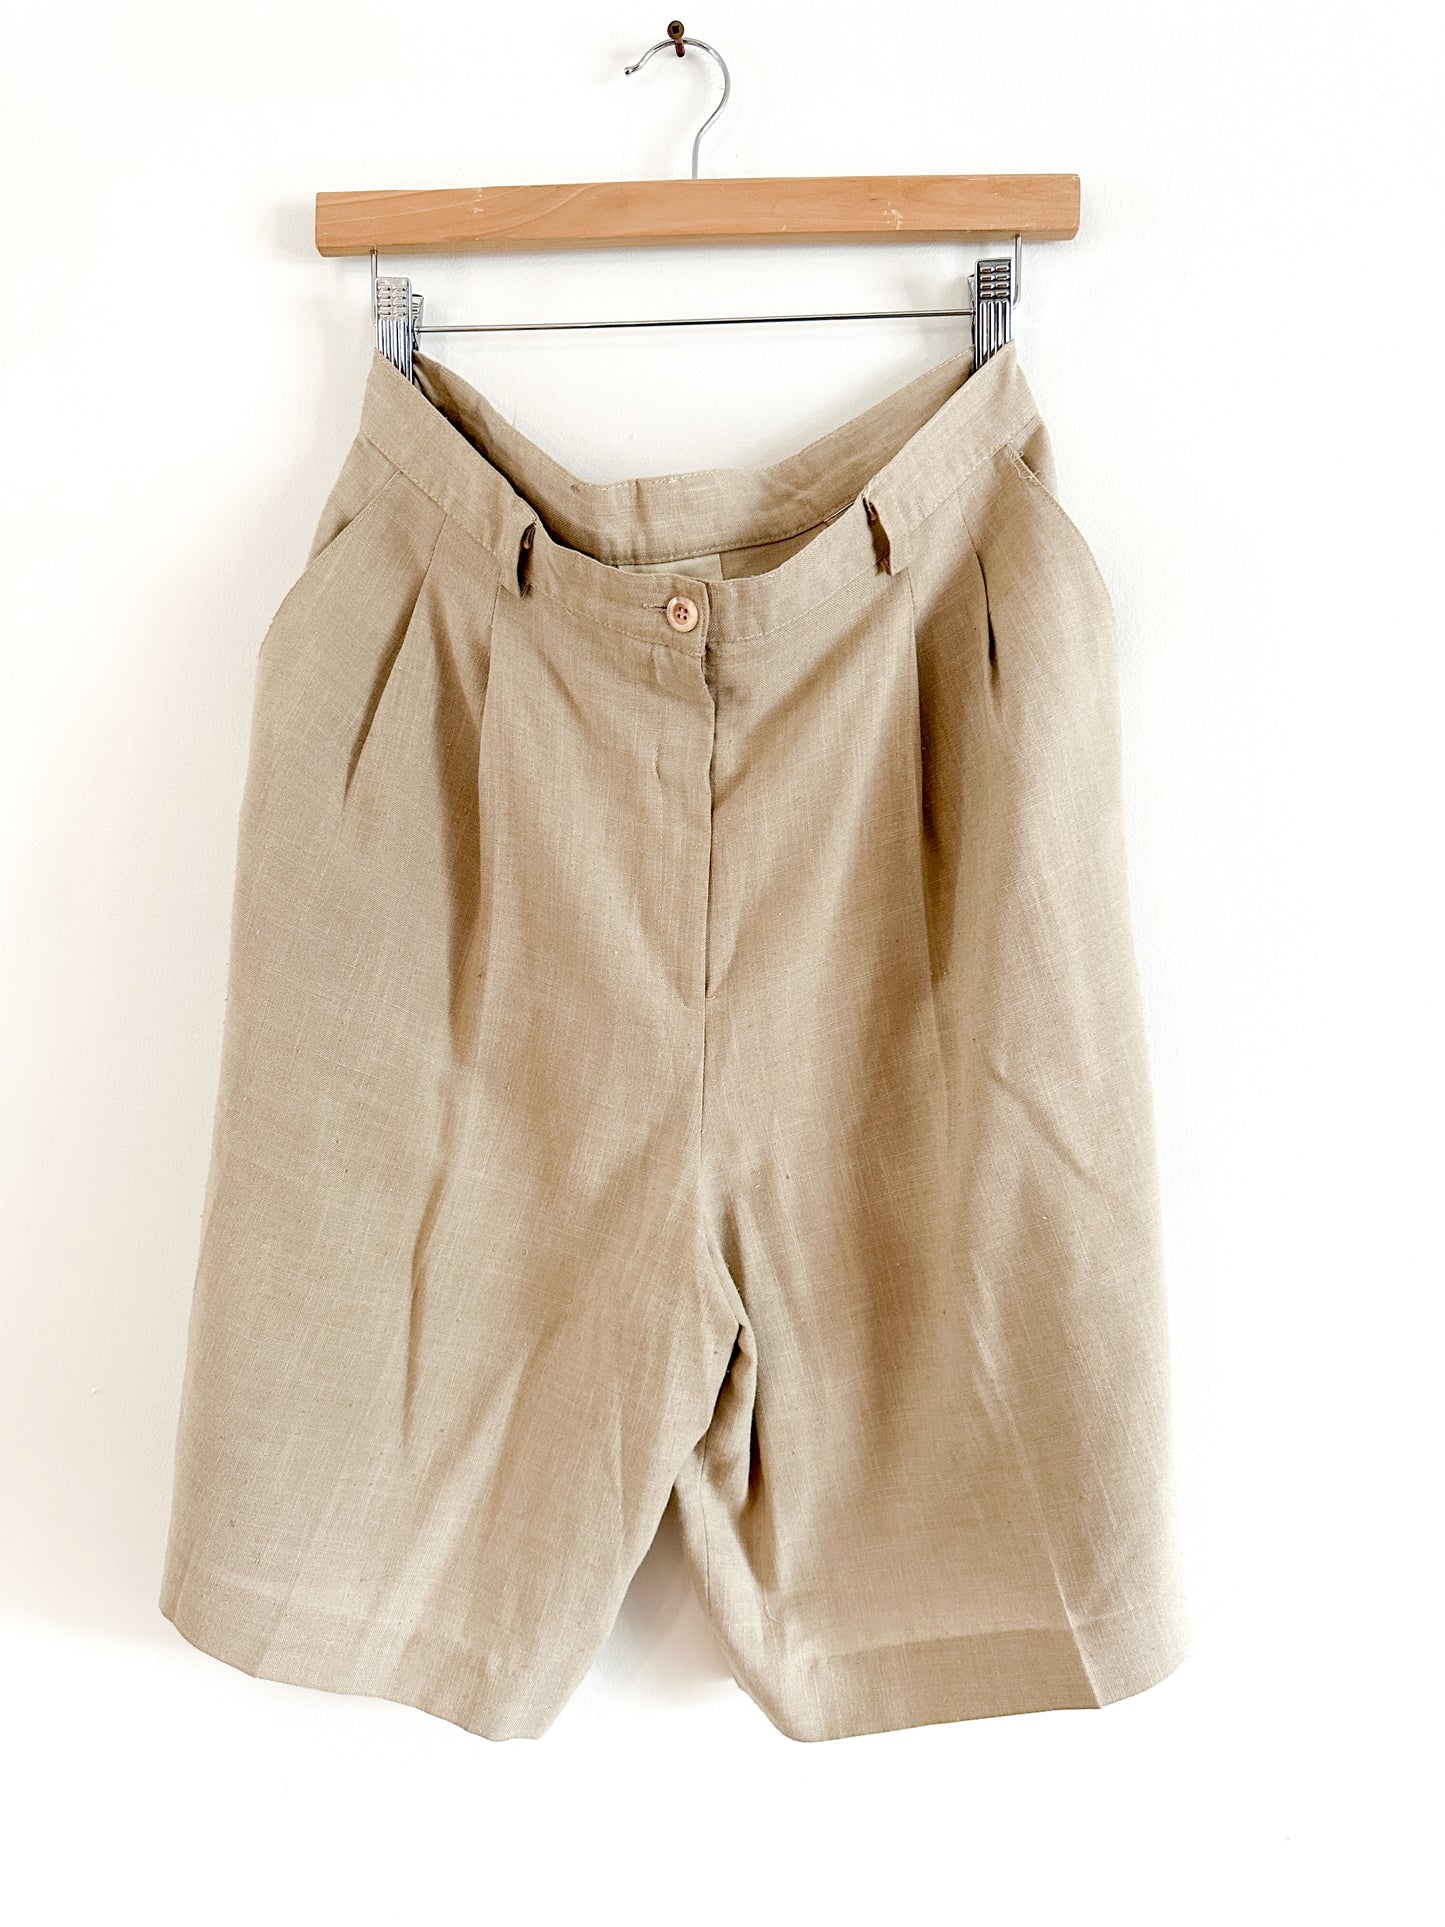 Vintage Women’s Tailored High Waisted Linen Blend Shorts